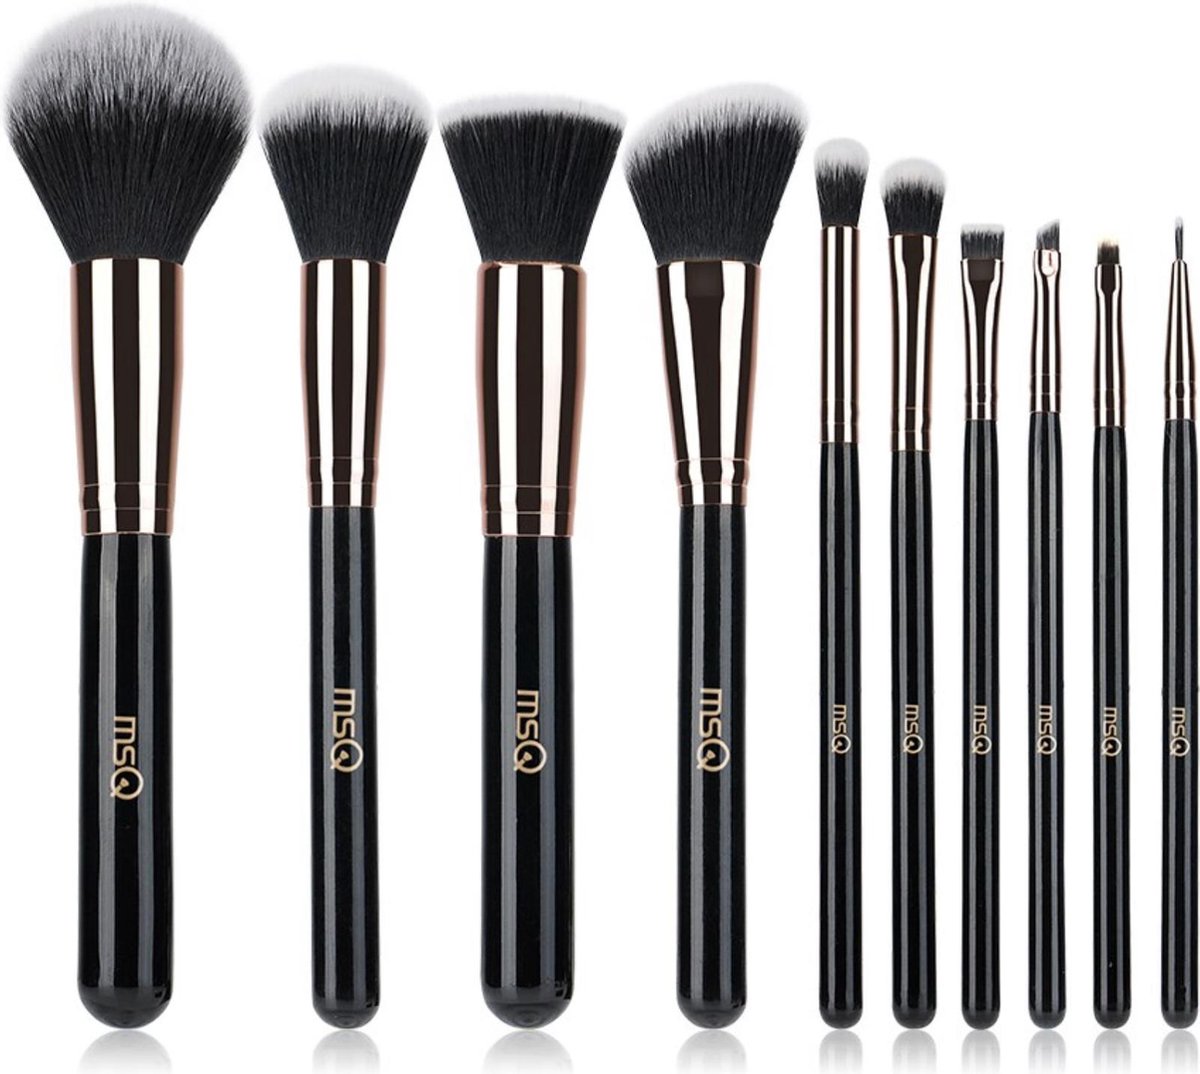 MSQ 10pcs Rose Gold/Balck Professional Makeup Brushes Set Powder Foundation Concealer Cheek Shader Make Up Tools Kit - MSQ